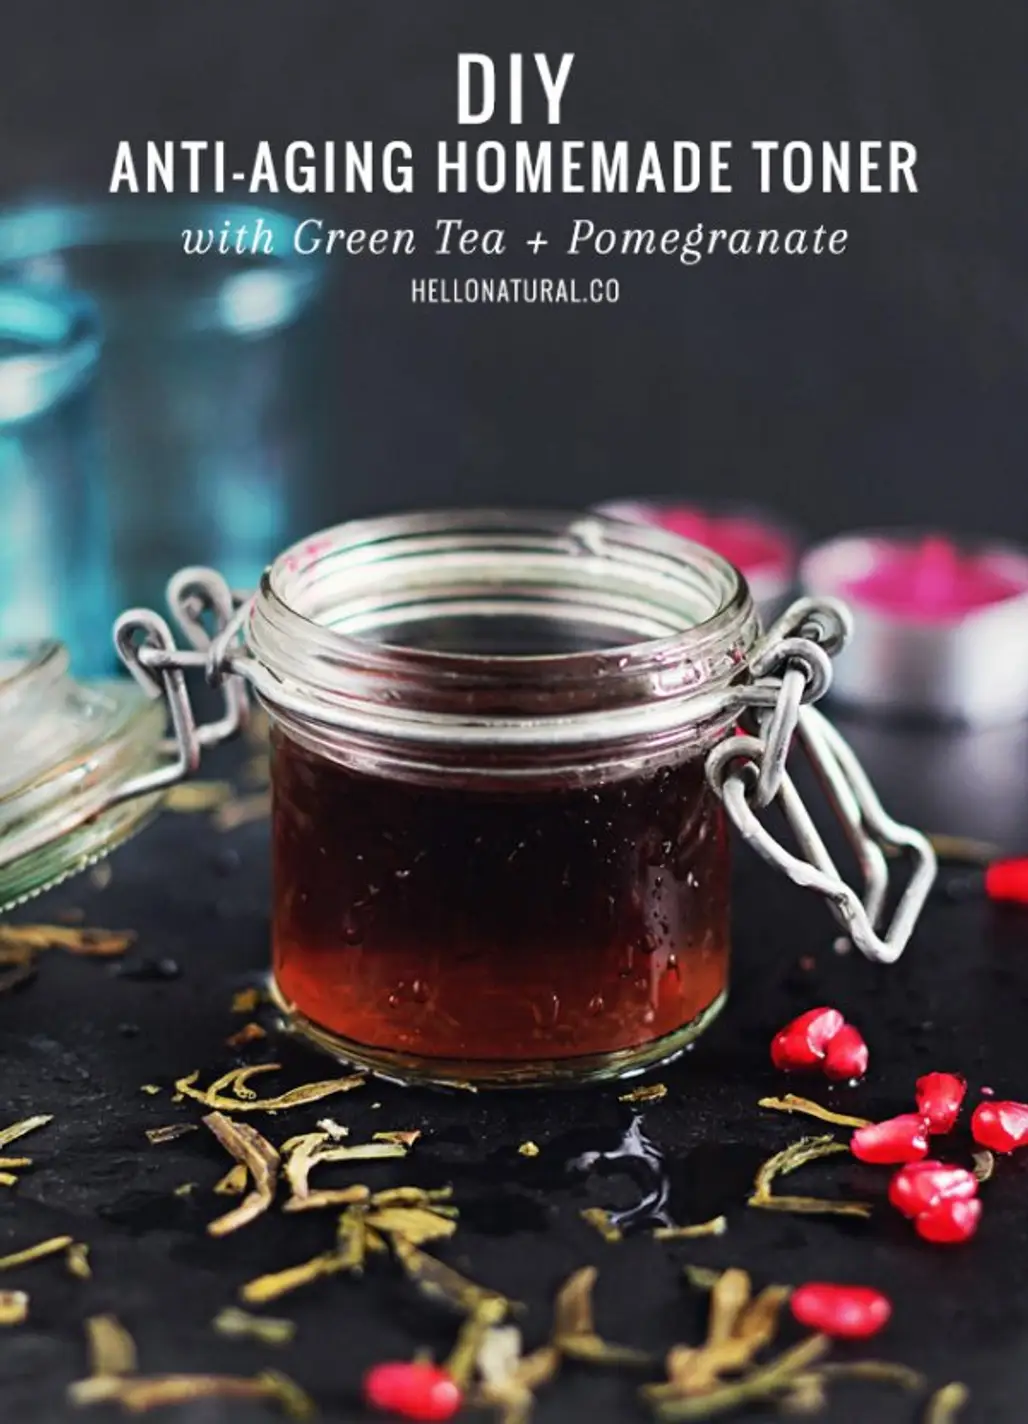 Green Tea and Pomegranate